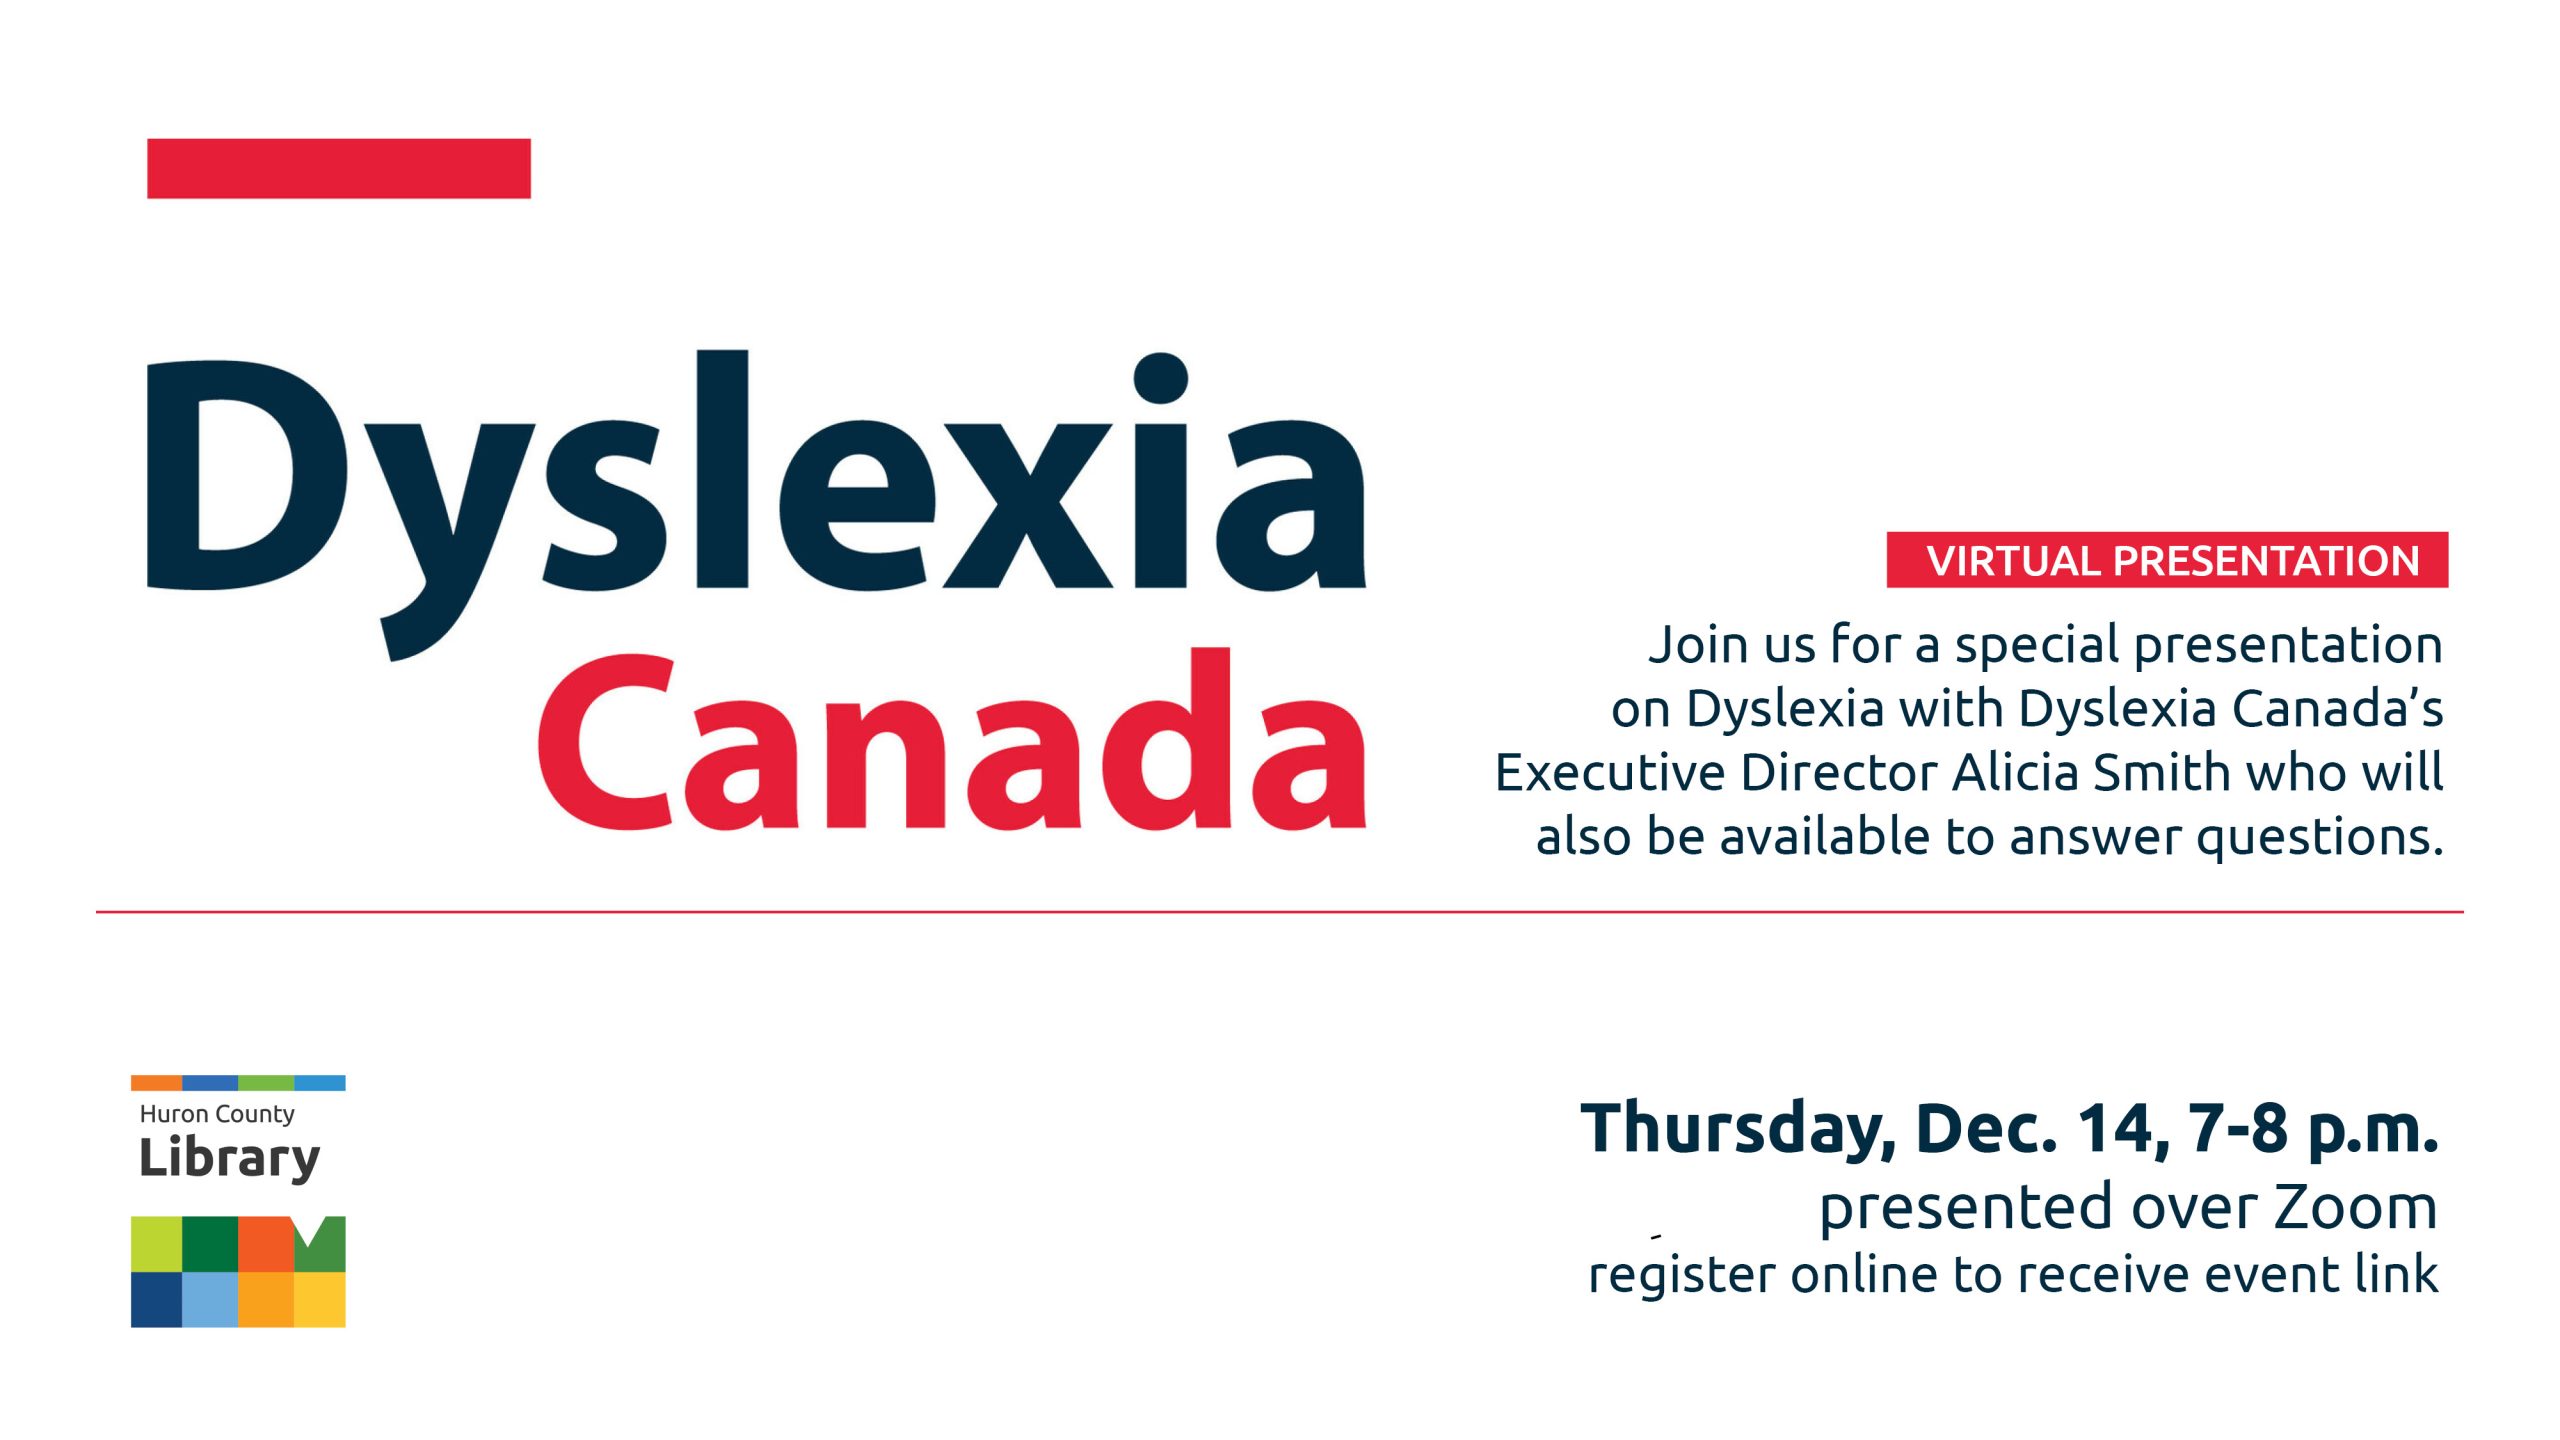 Dyslexia Canada logo with text promoting virtual talk